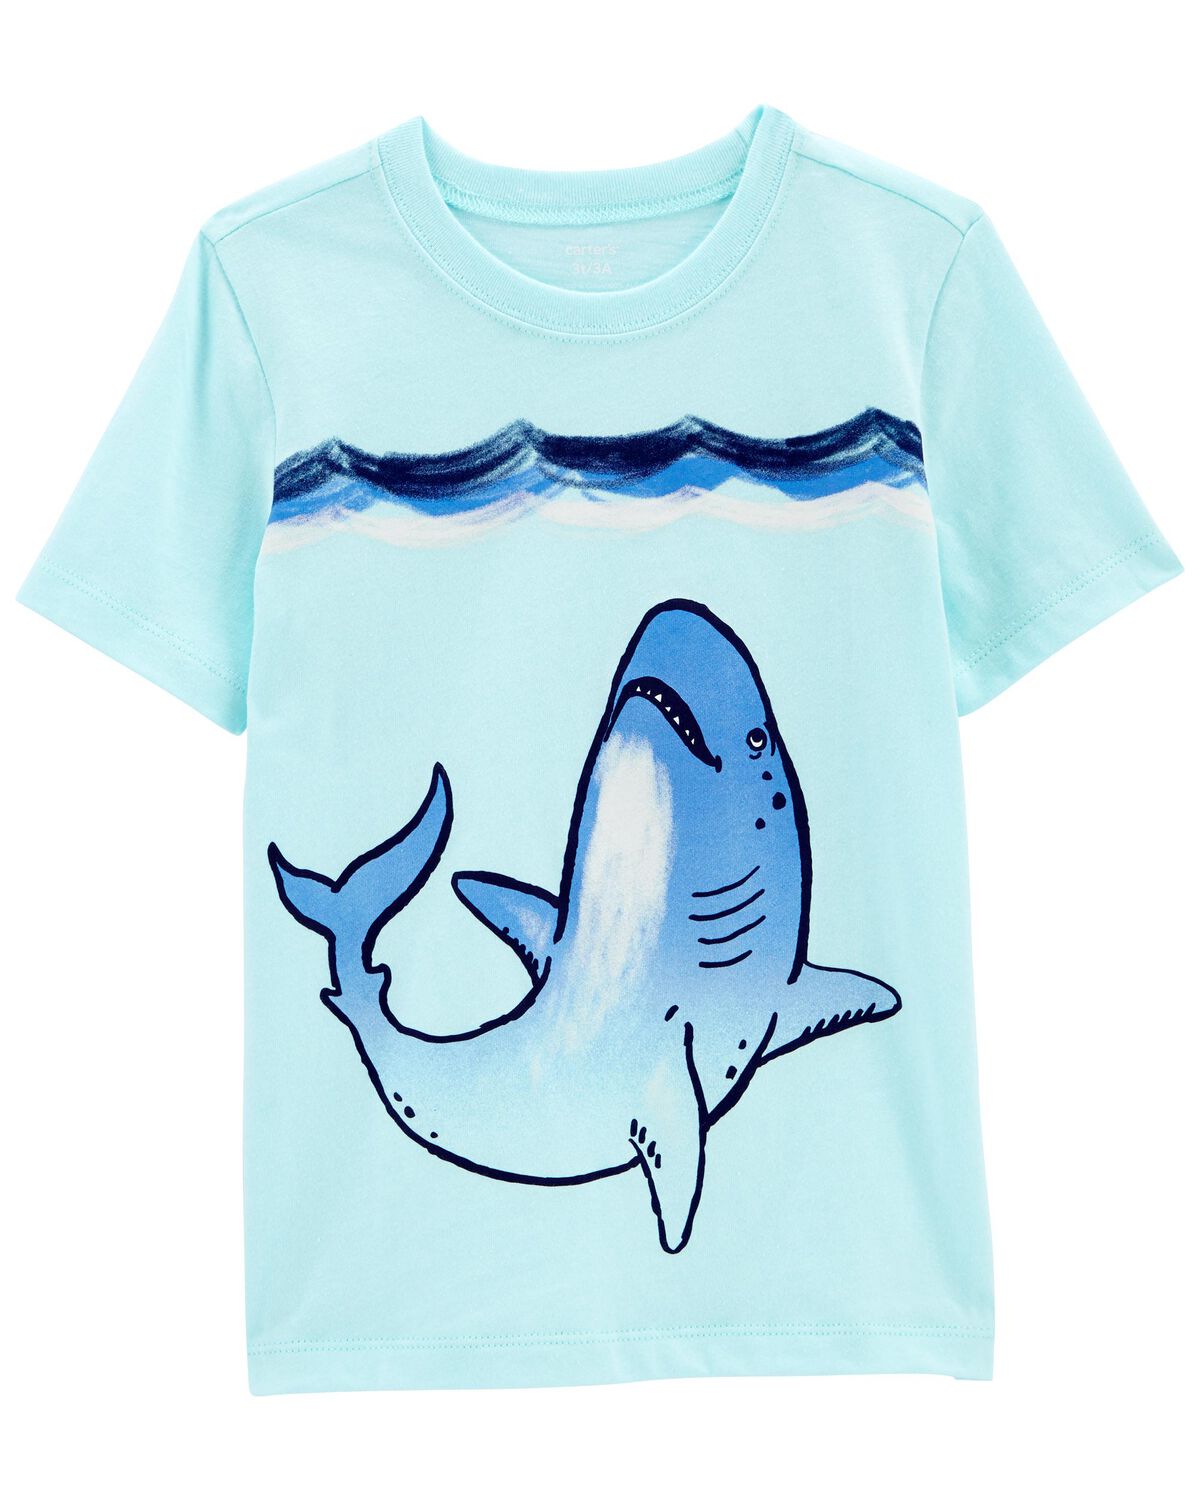 Blue Toddler Shark Graphic Tee | carters.com